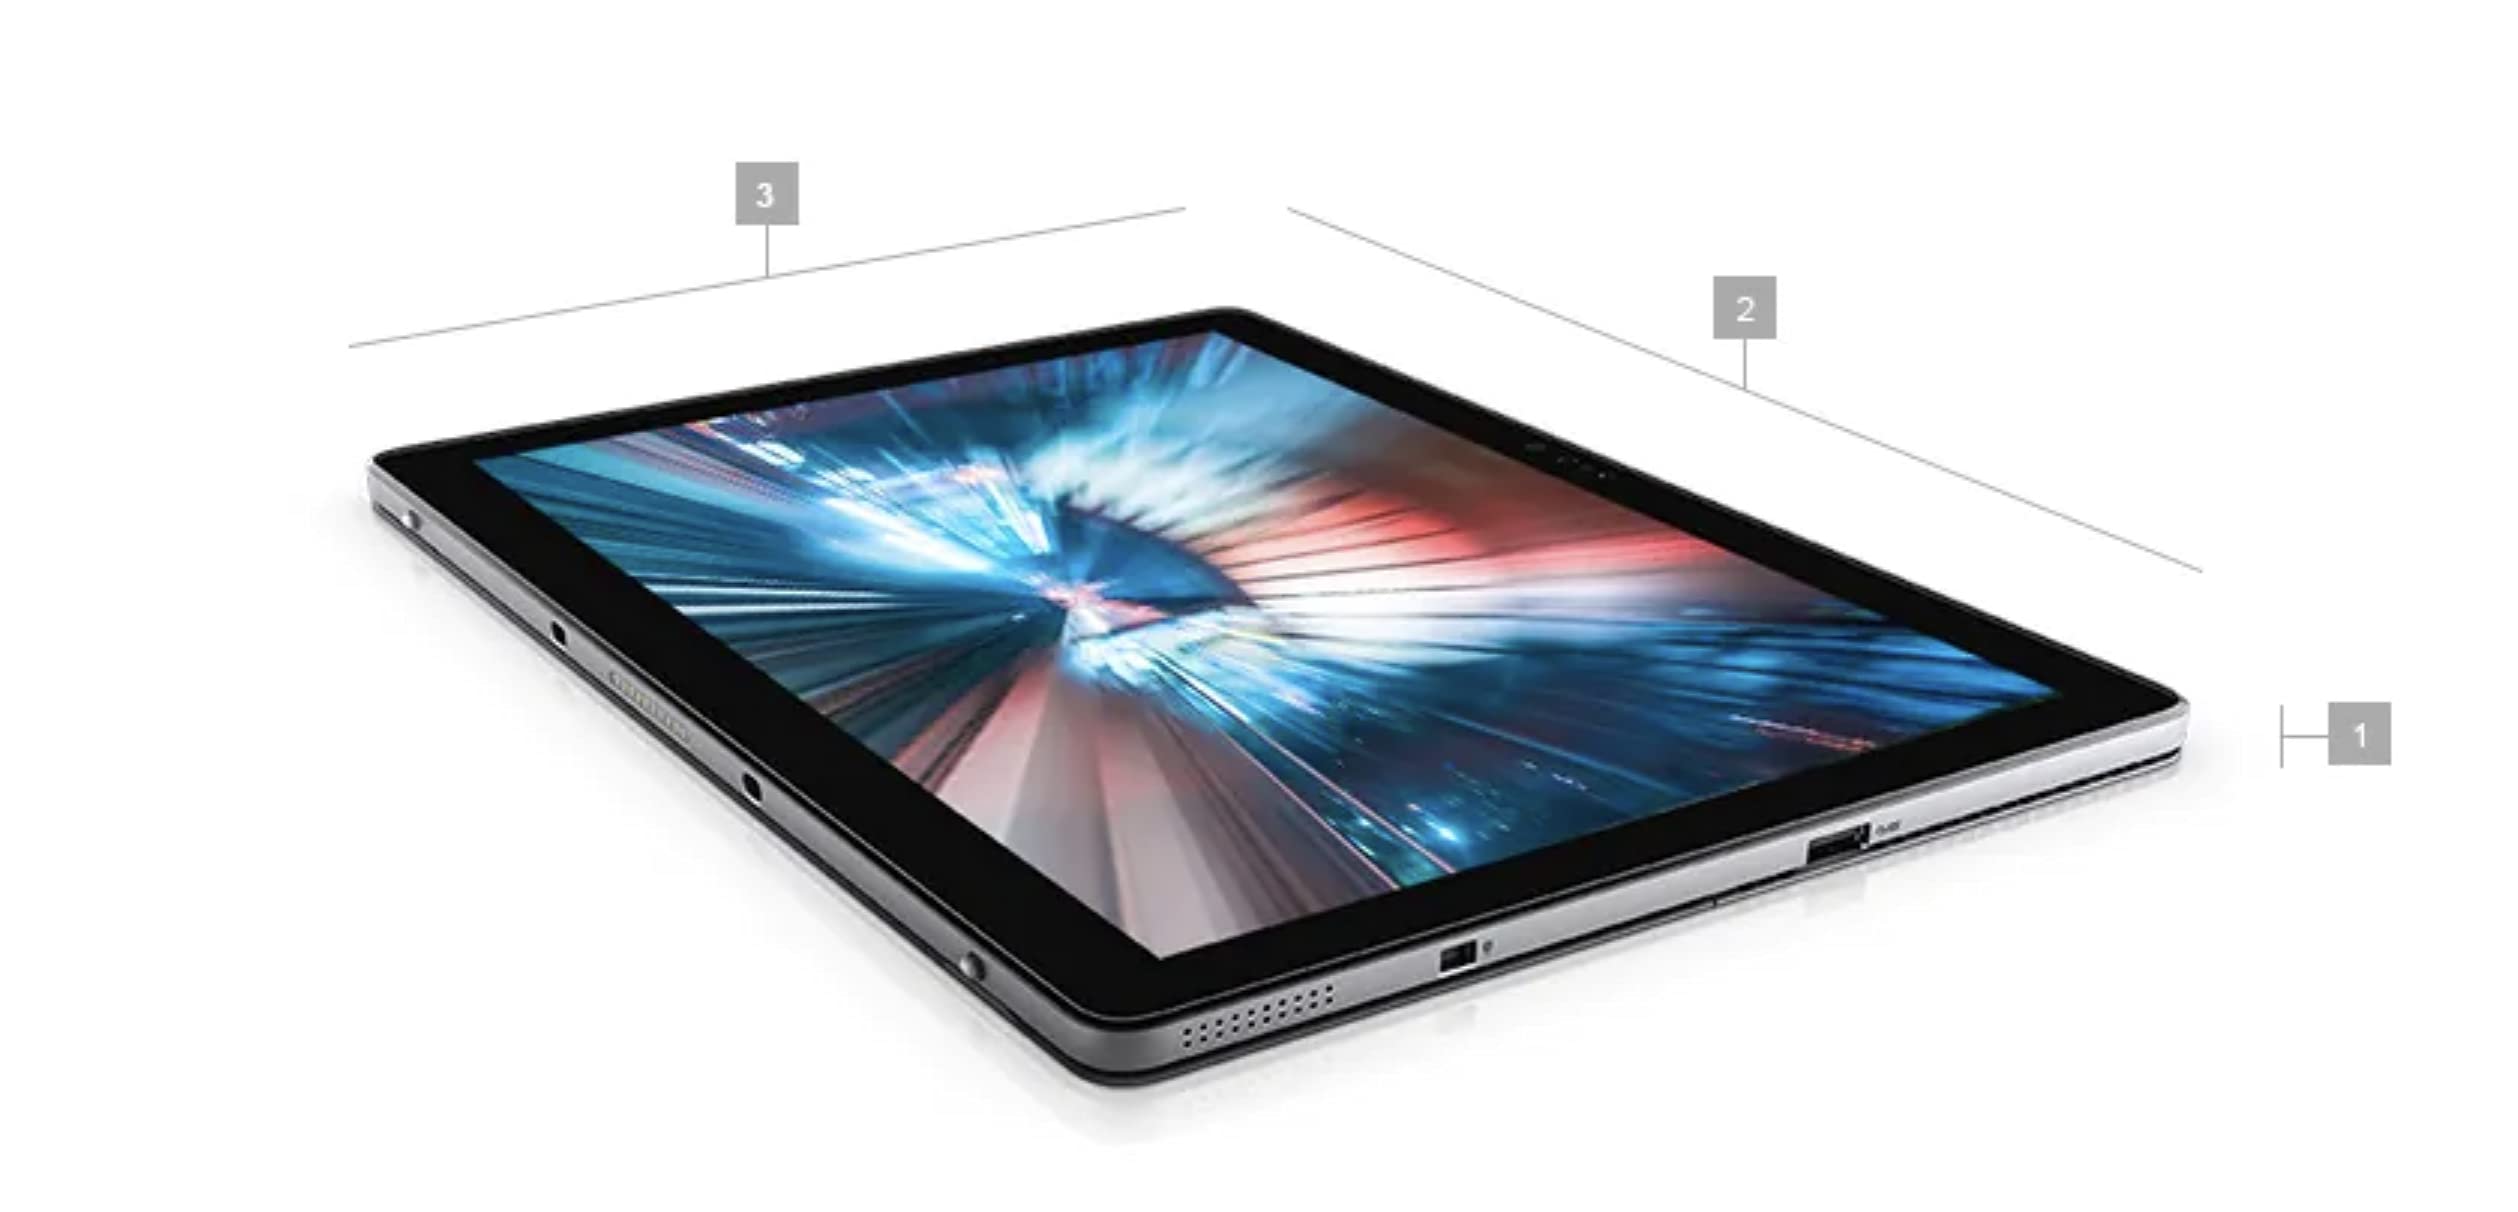 Dell Latitude 7200 Tablet - 12.3" - 16GB RAM - 512GB SSD - Windows 10 Pro 64-bit